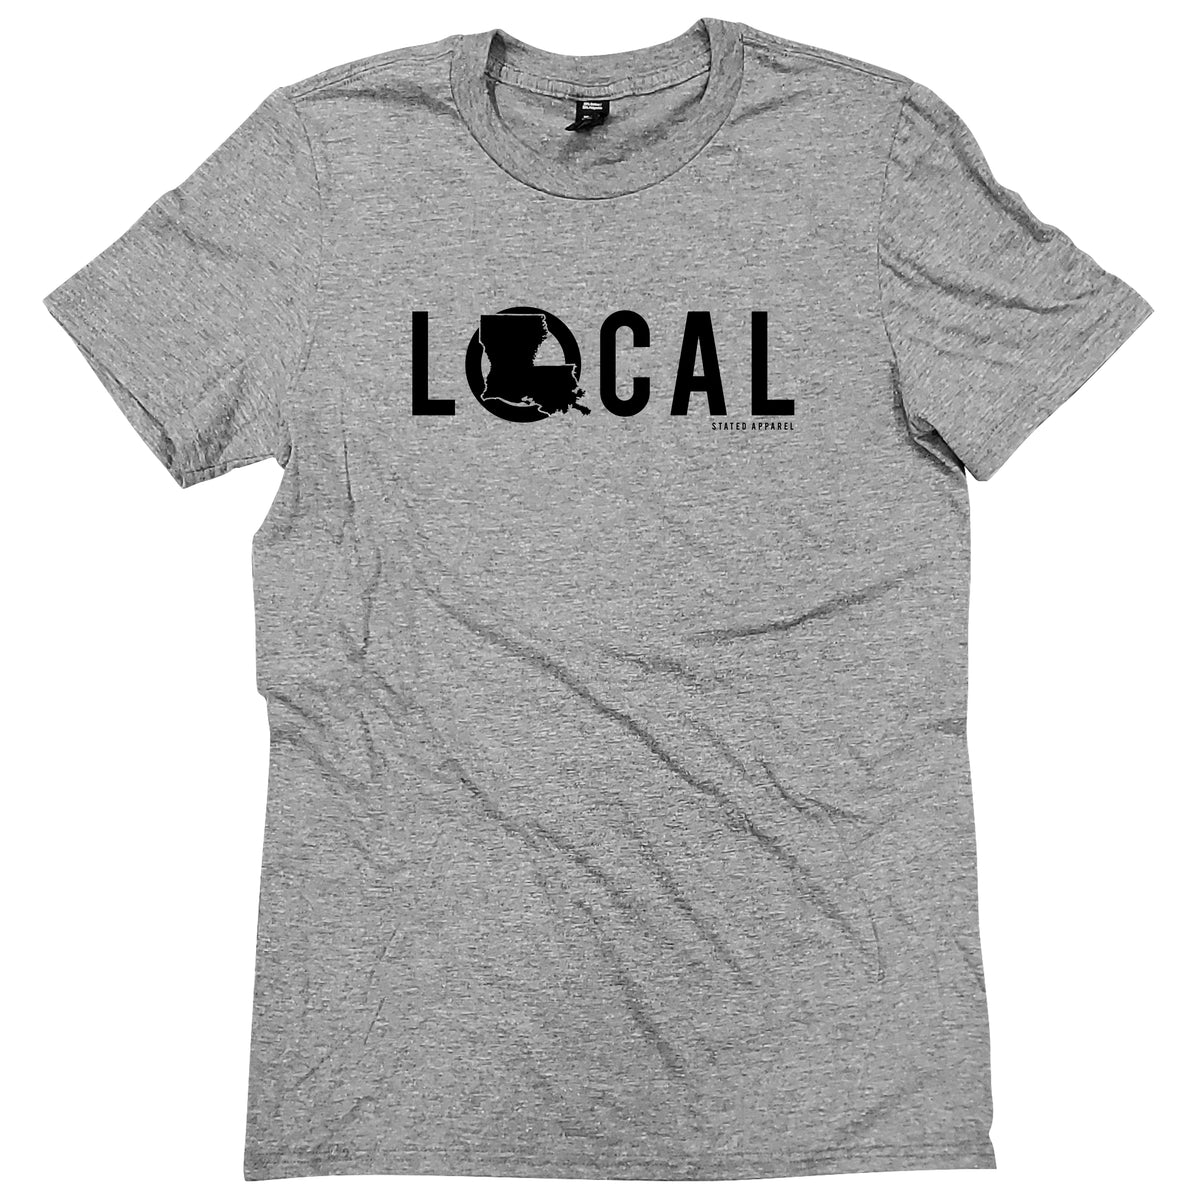 Louisiana Local T-Shirt